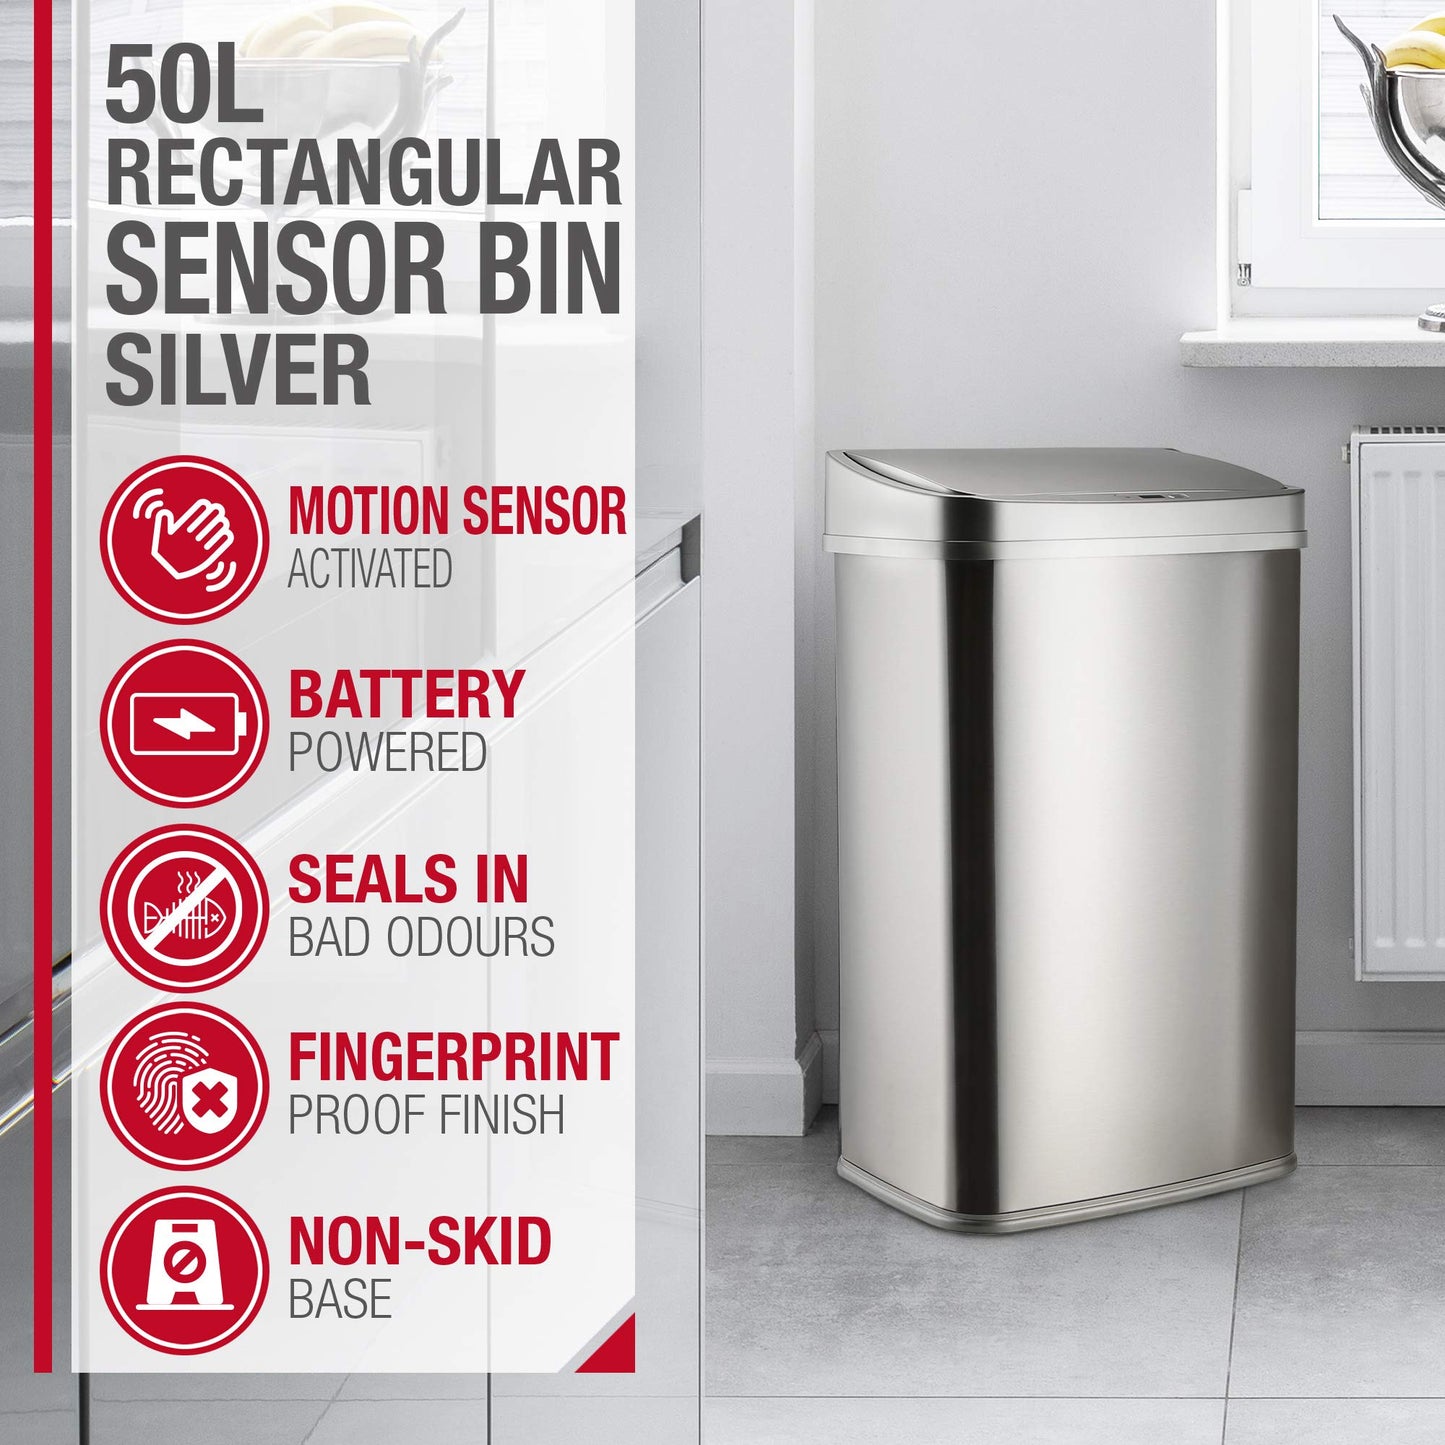 NETTA 50L Sensor Bin for Kitchen - Large Touch-Free Automatic Motion Sensor Waste Rubbish Bin, Dustbin, Trash Can - Rectangular Stainless Steel Silver 50 Litre